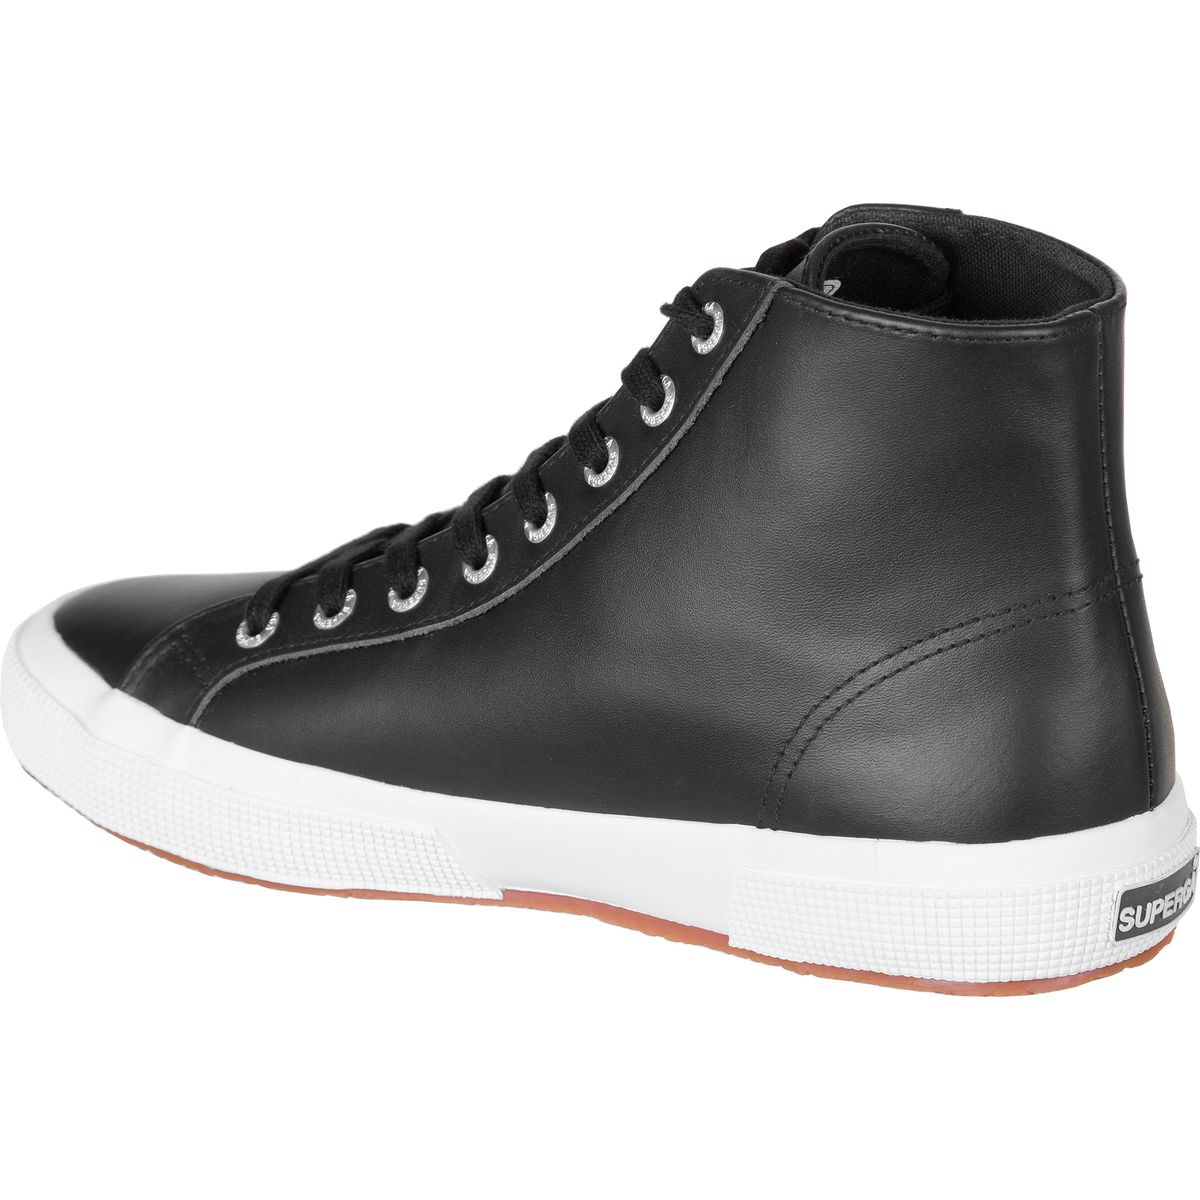 Superga Leather Hi Top Sneaker - Women's | Backcountry.com